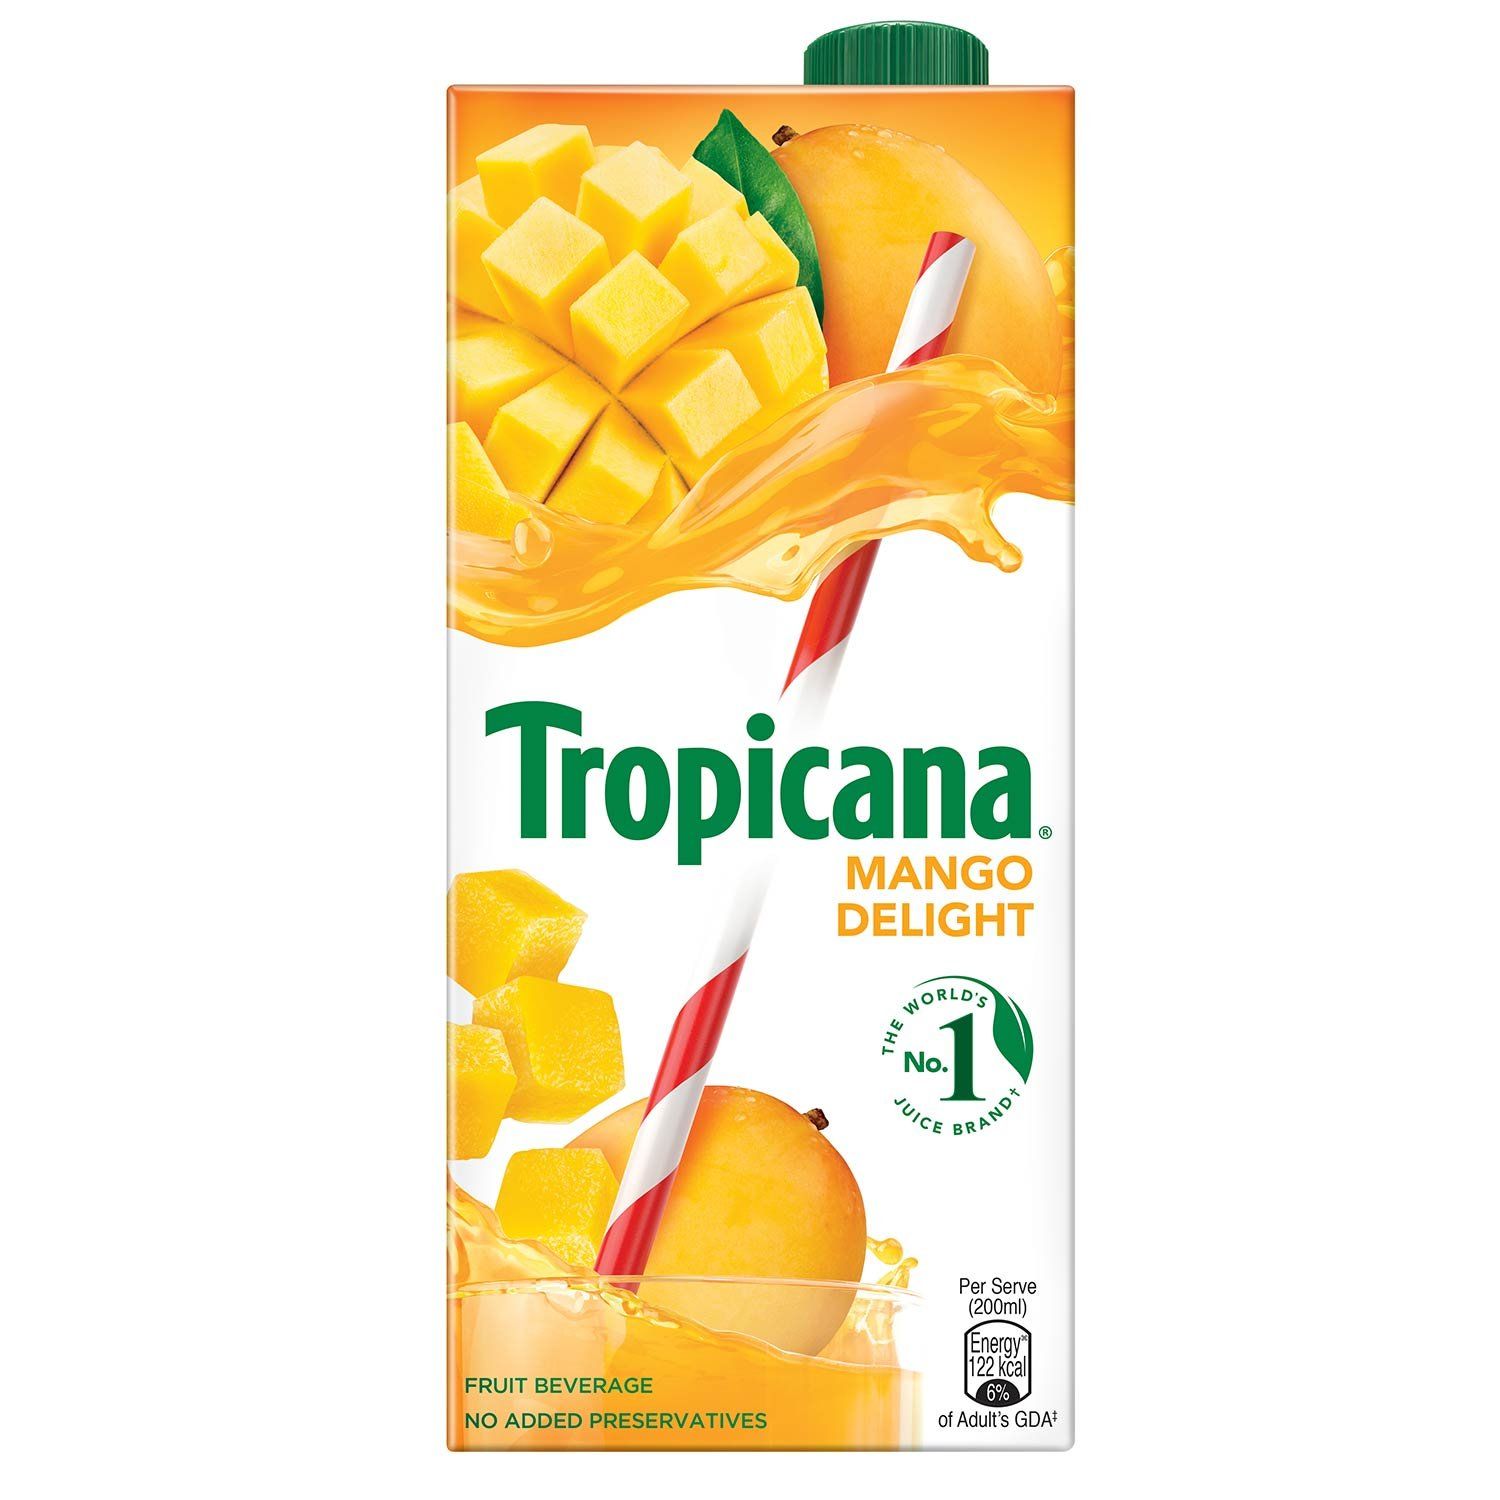 Tropicana Mango Delight Juice Image